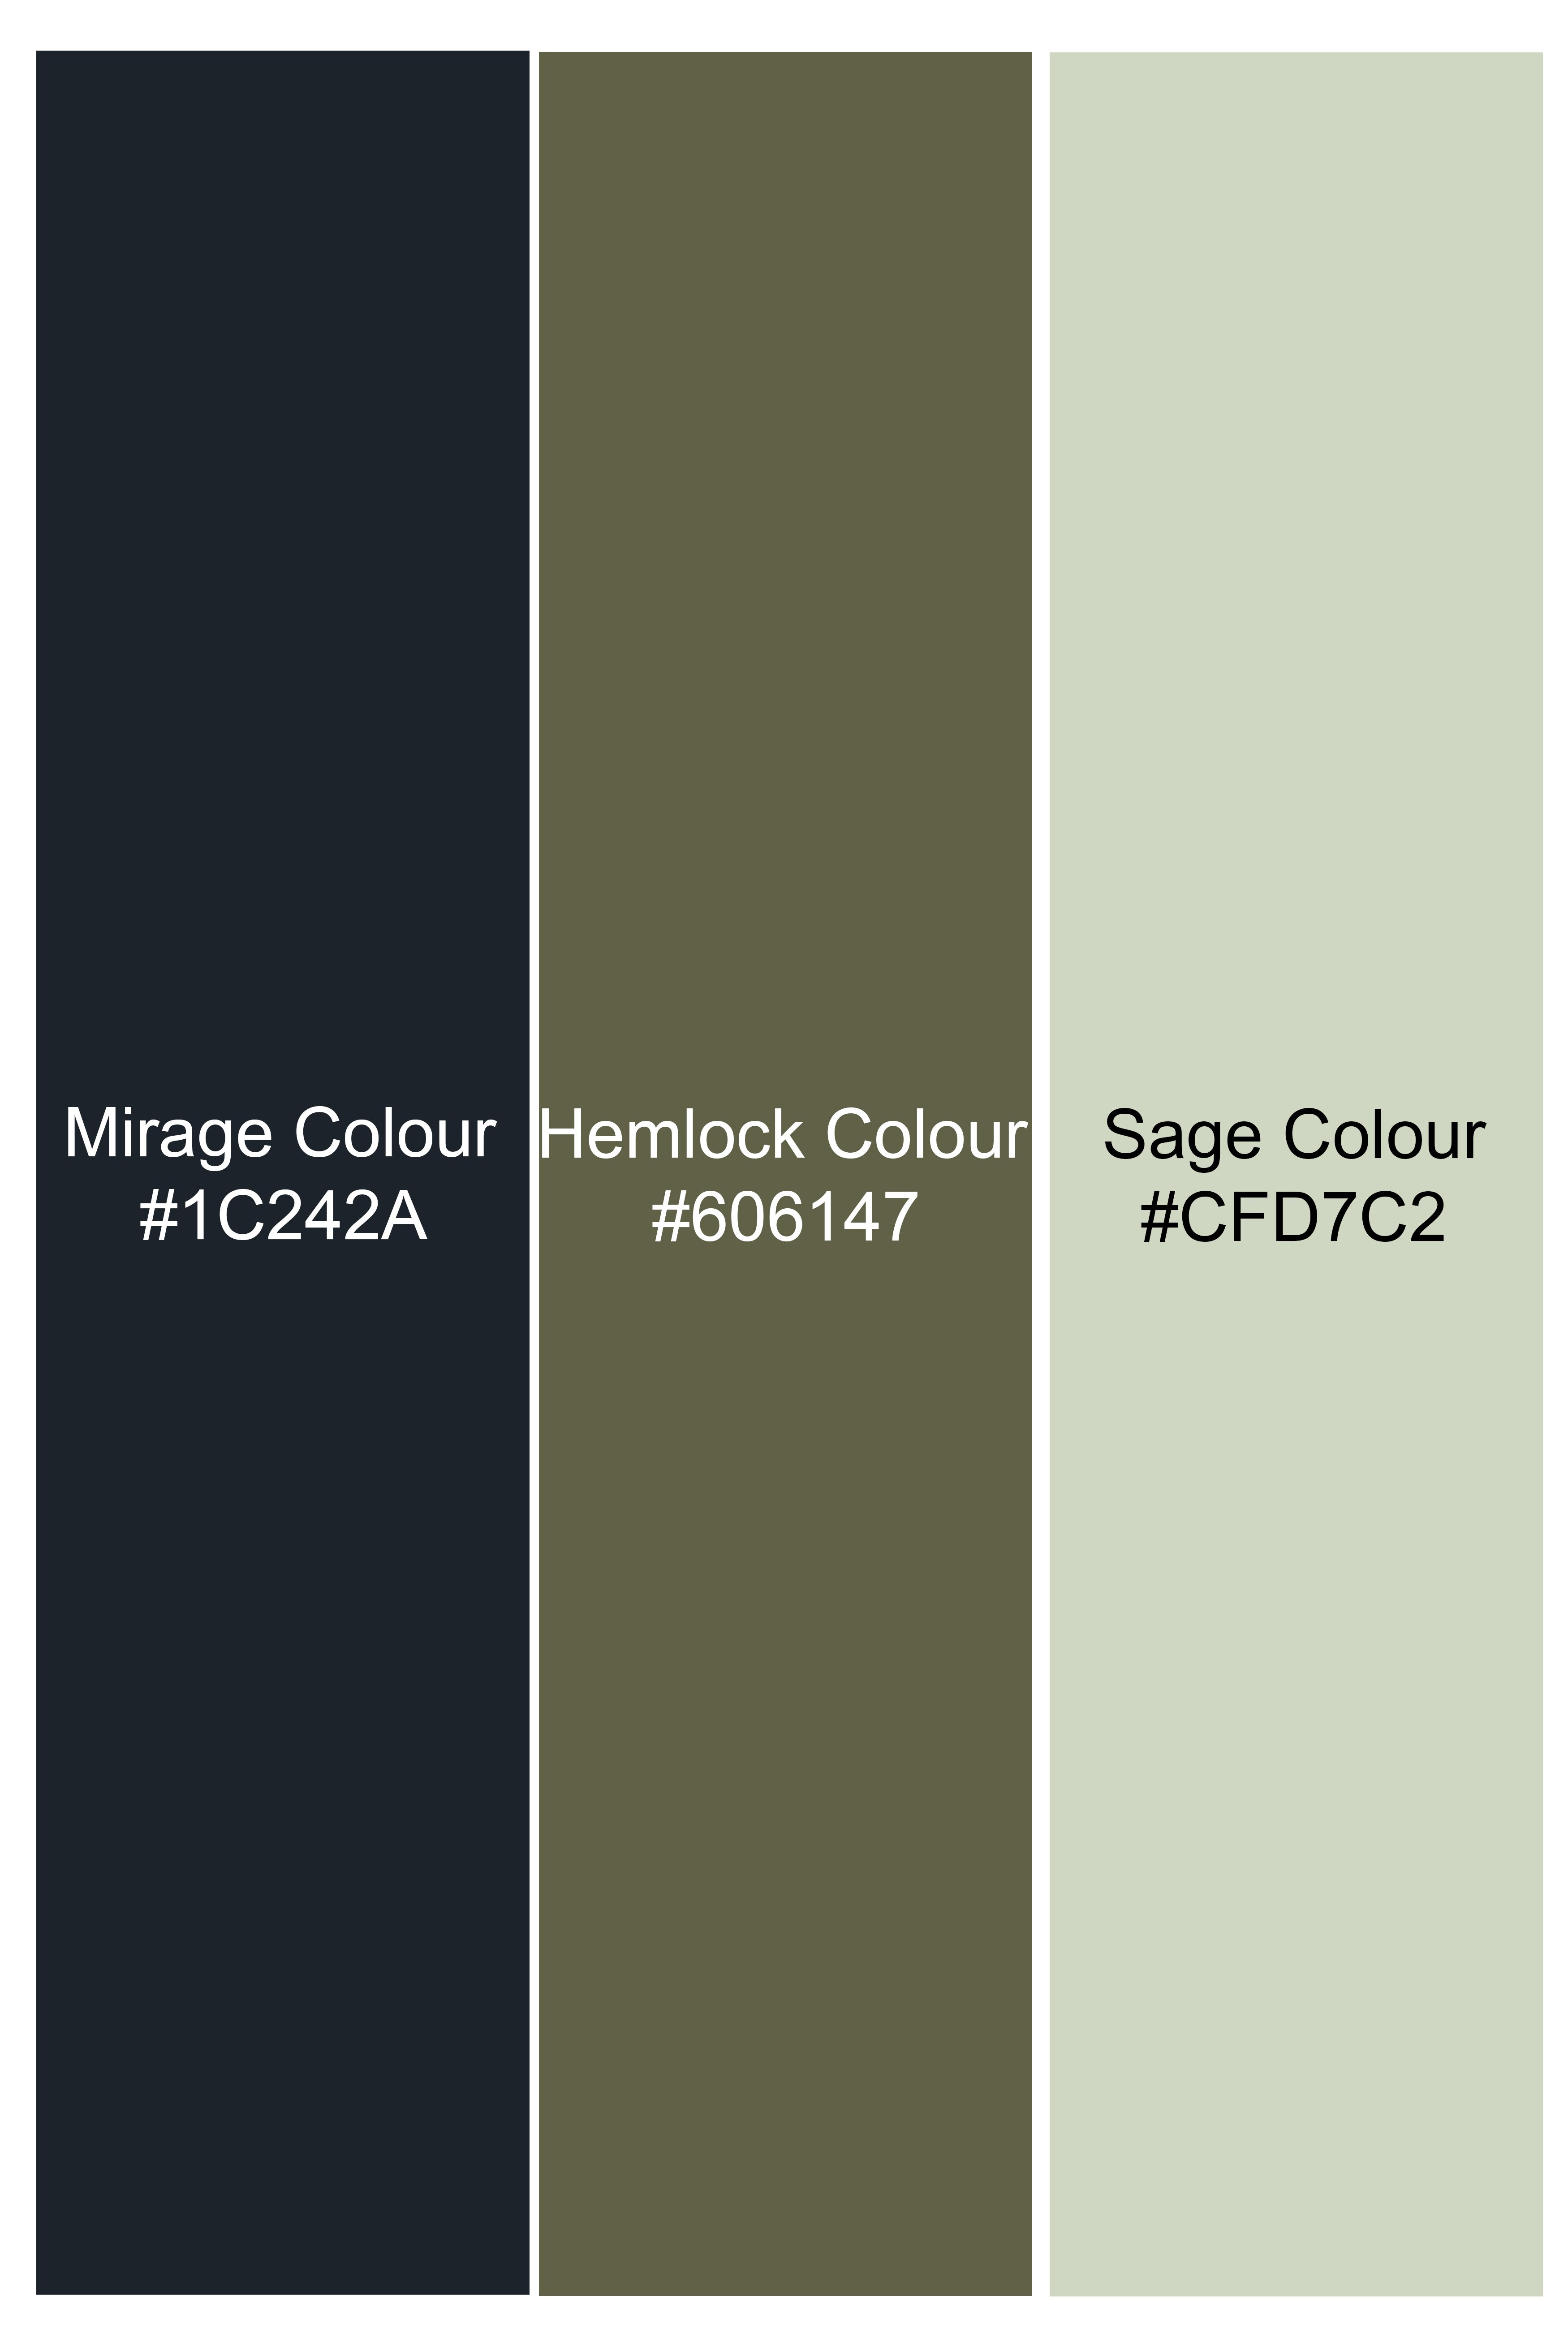 Mirage Black and Sage Green Printed Premium Cotton Single-Breasted Blazer BL3034-SB-36, BL3034-SB-38, BL3034-SB-40, BL3034-SB-42, BL3034-SB-44, BL3034-SB-46, BL3034-SB-48, BL3034-SB-50, BL3034-SB-52, BL3034-SB-54, BL3034-SB-56, BL3034-SB-58, BL3034-SB-60